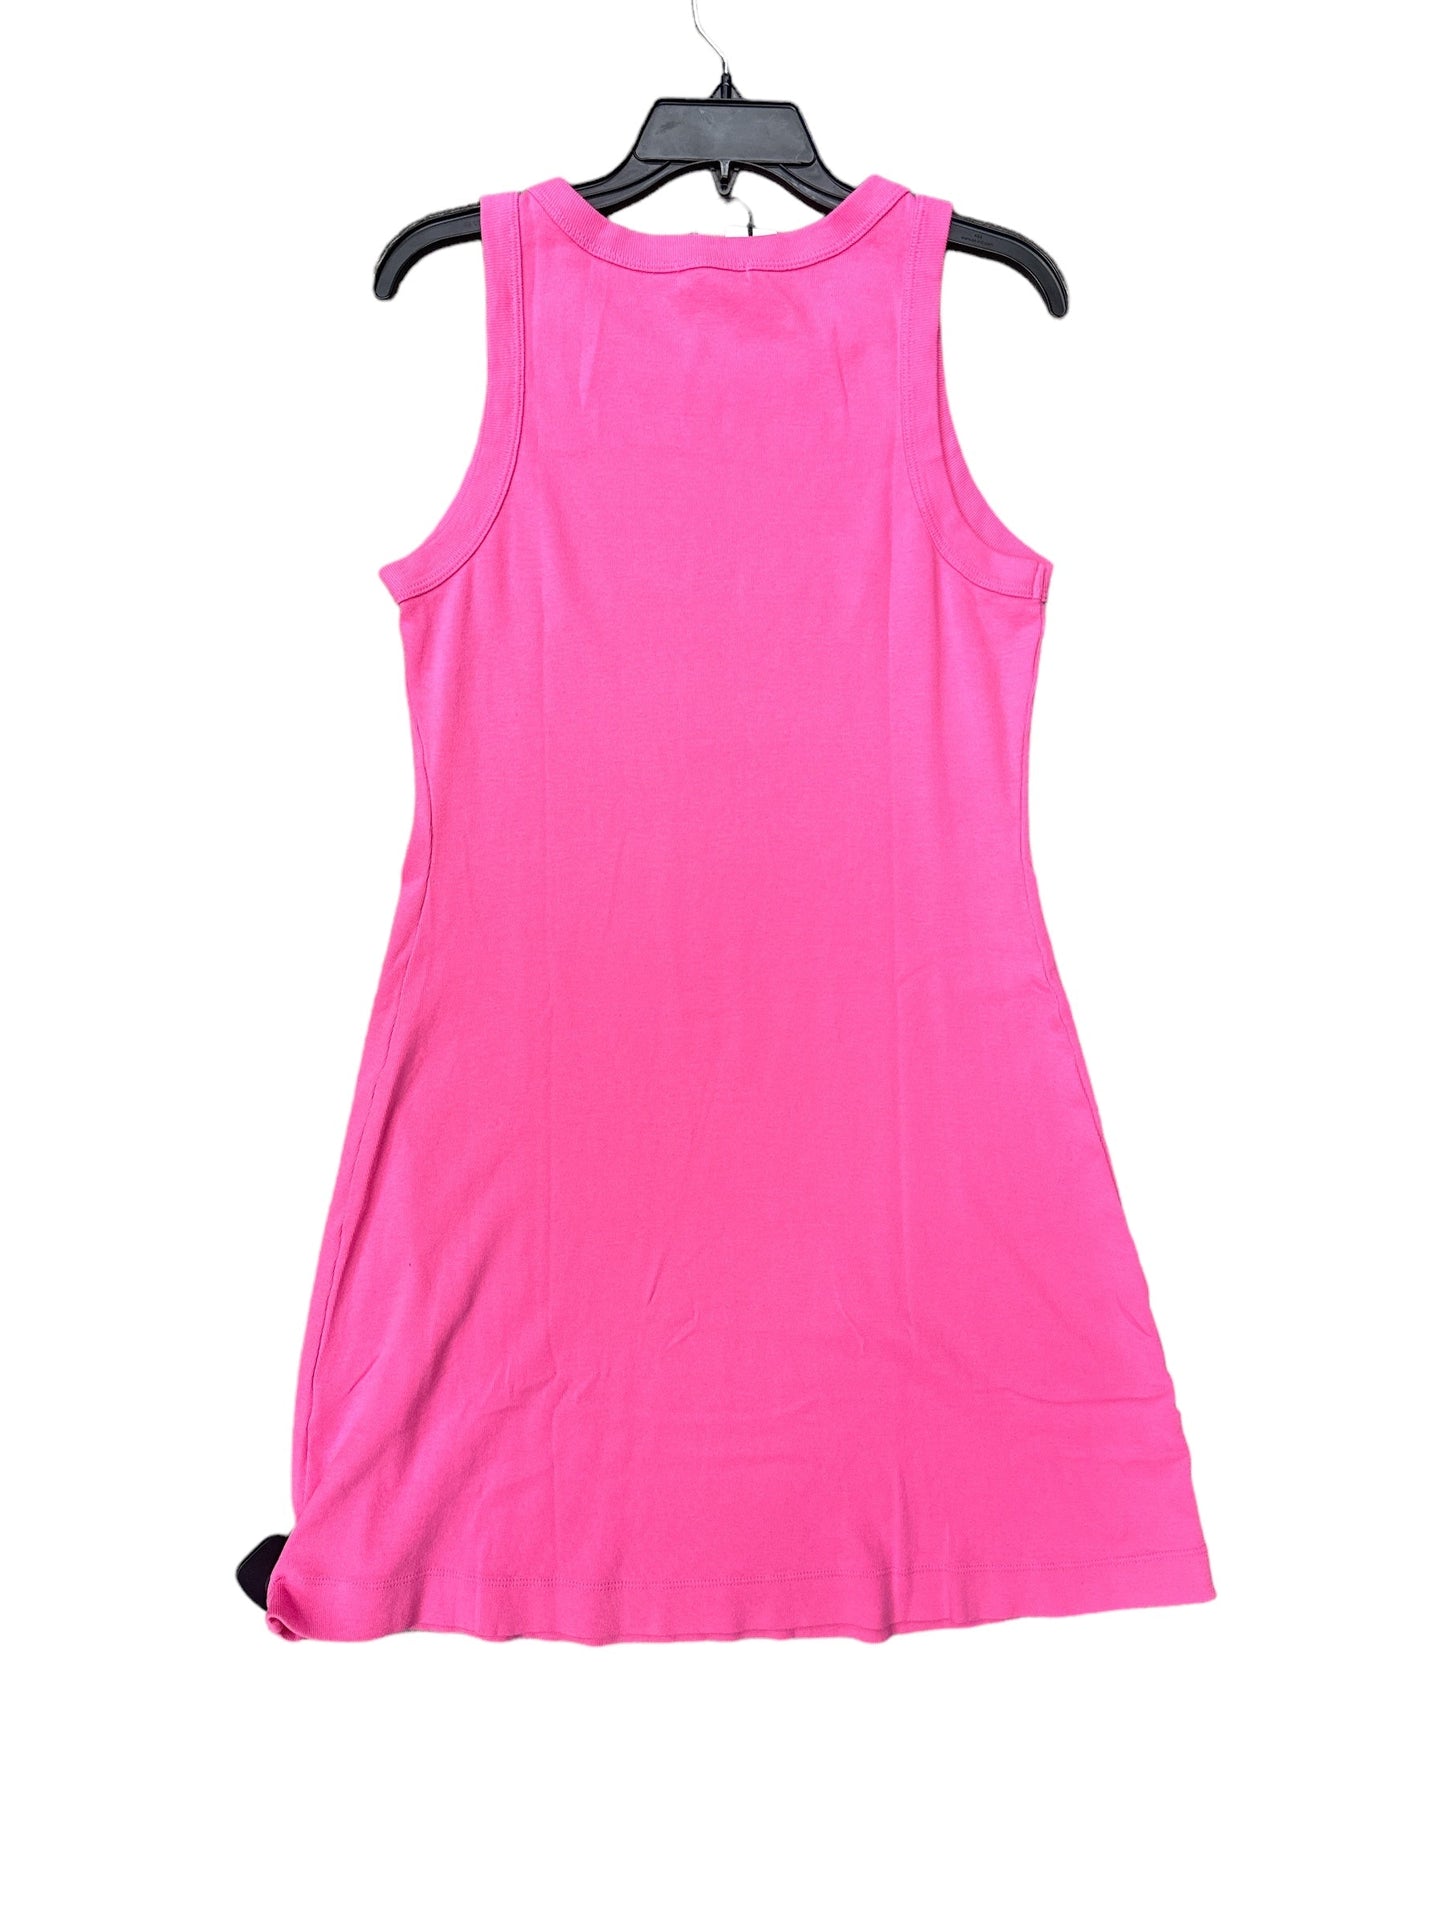 Pink Dress Casual Short Michael Stars, Size 8